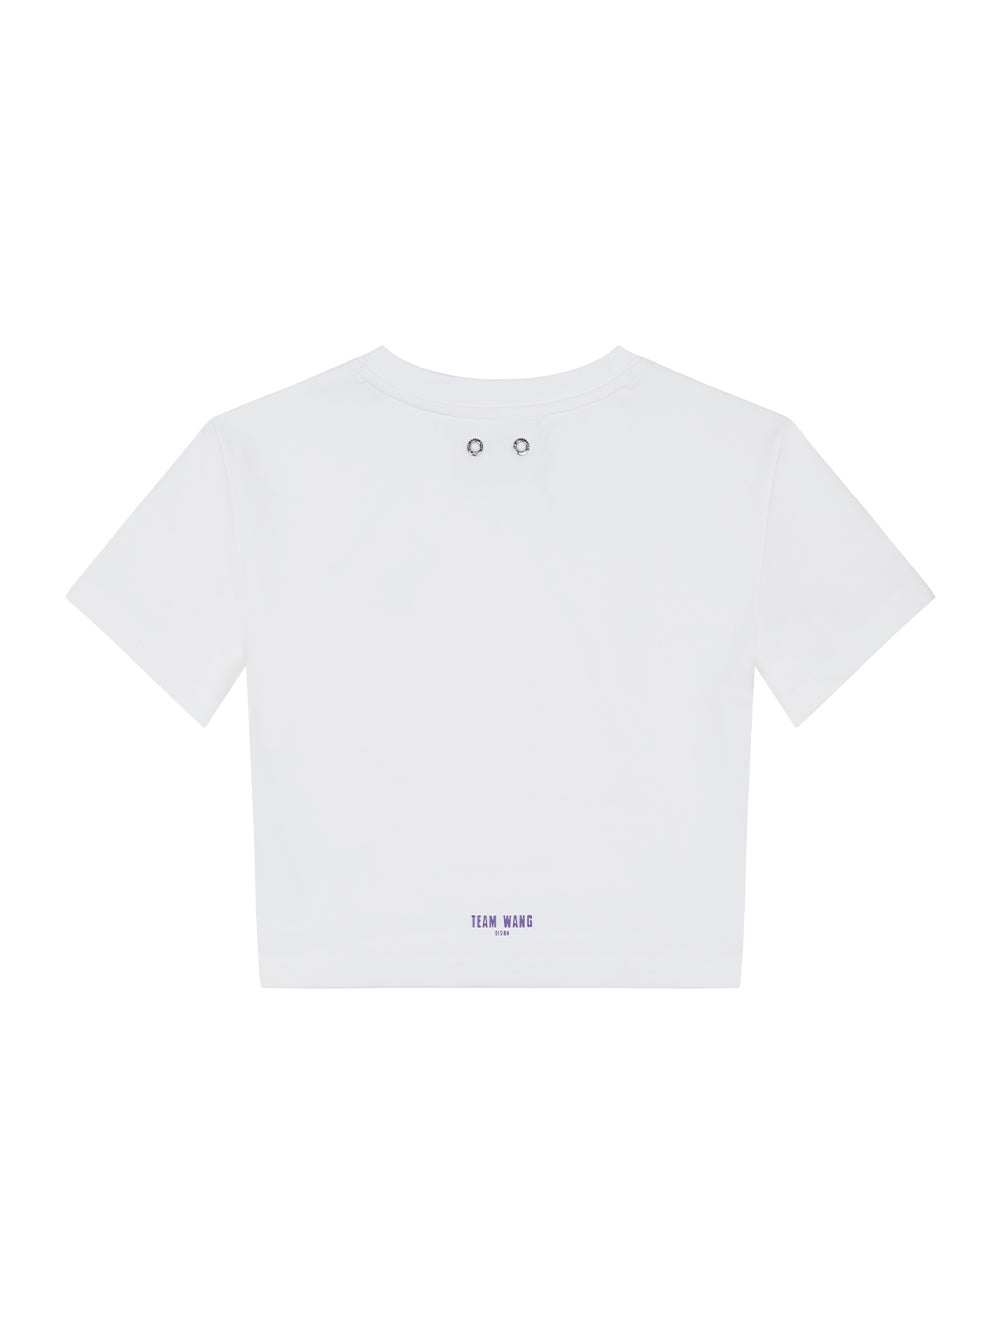 TEAM WANG design x CHUANG ASIA Bodycon Short-Sleeved T-Shirt (White)